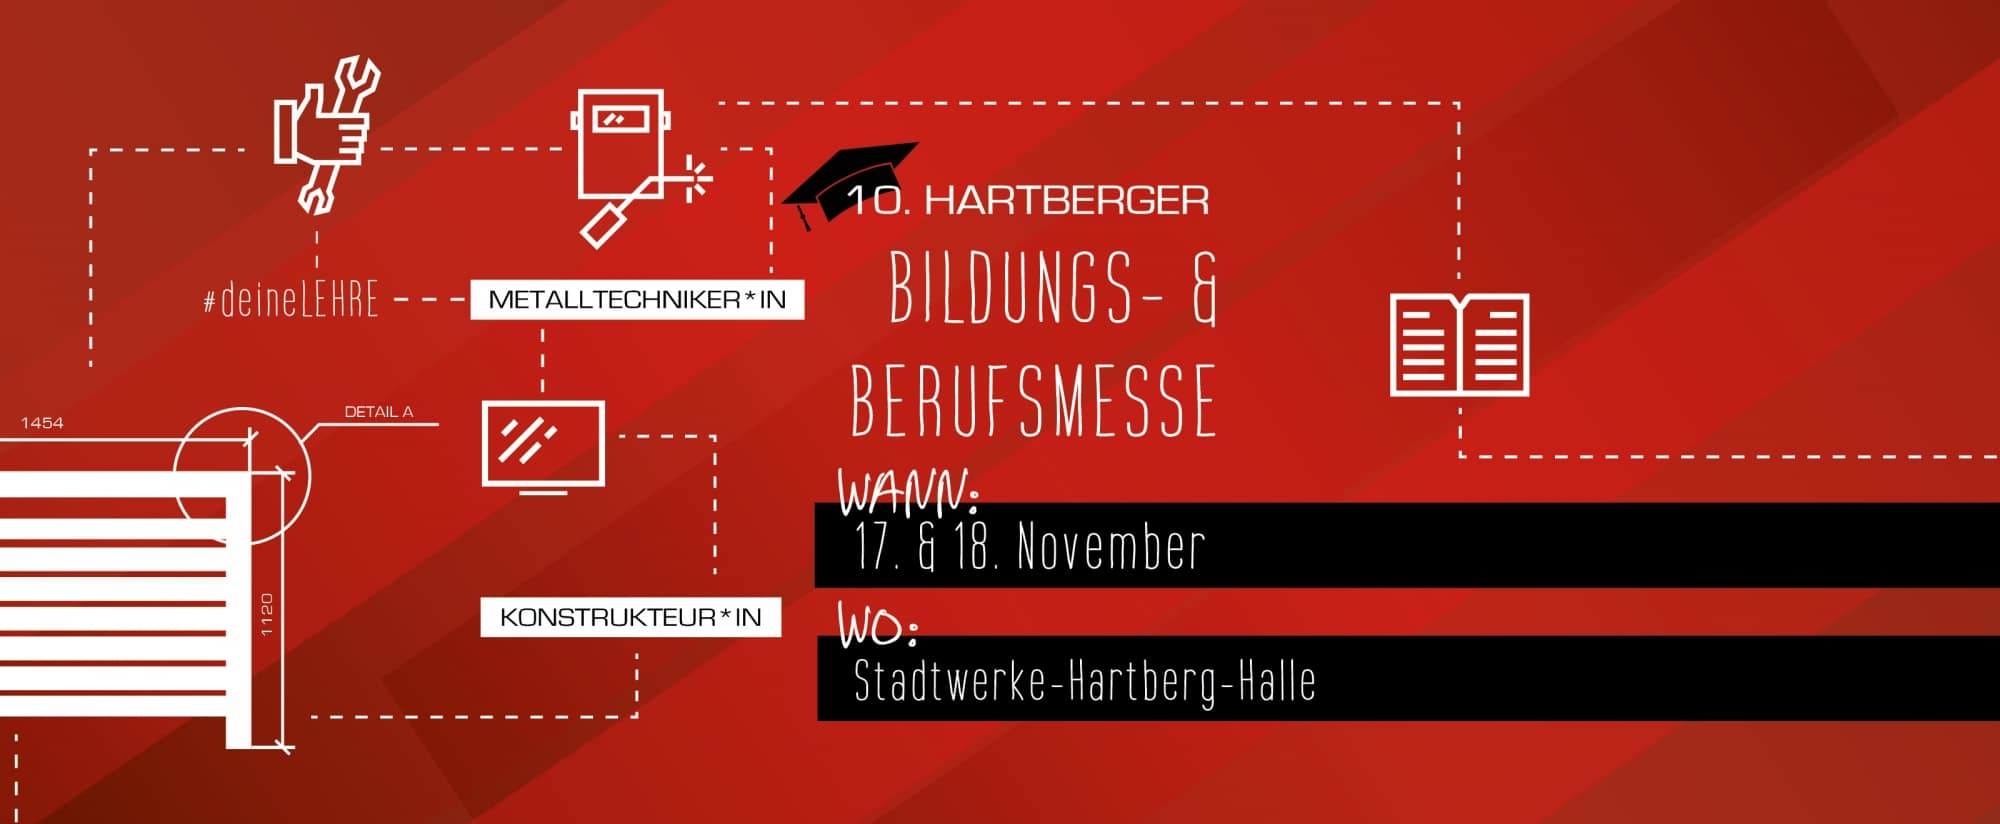 10. Bildungs- & Berufsmesse Hartberg | 17.11. & 18.11 Stadtwerke-Hartberg-Halle | Svoboda Metalltechnik